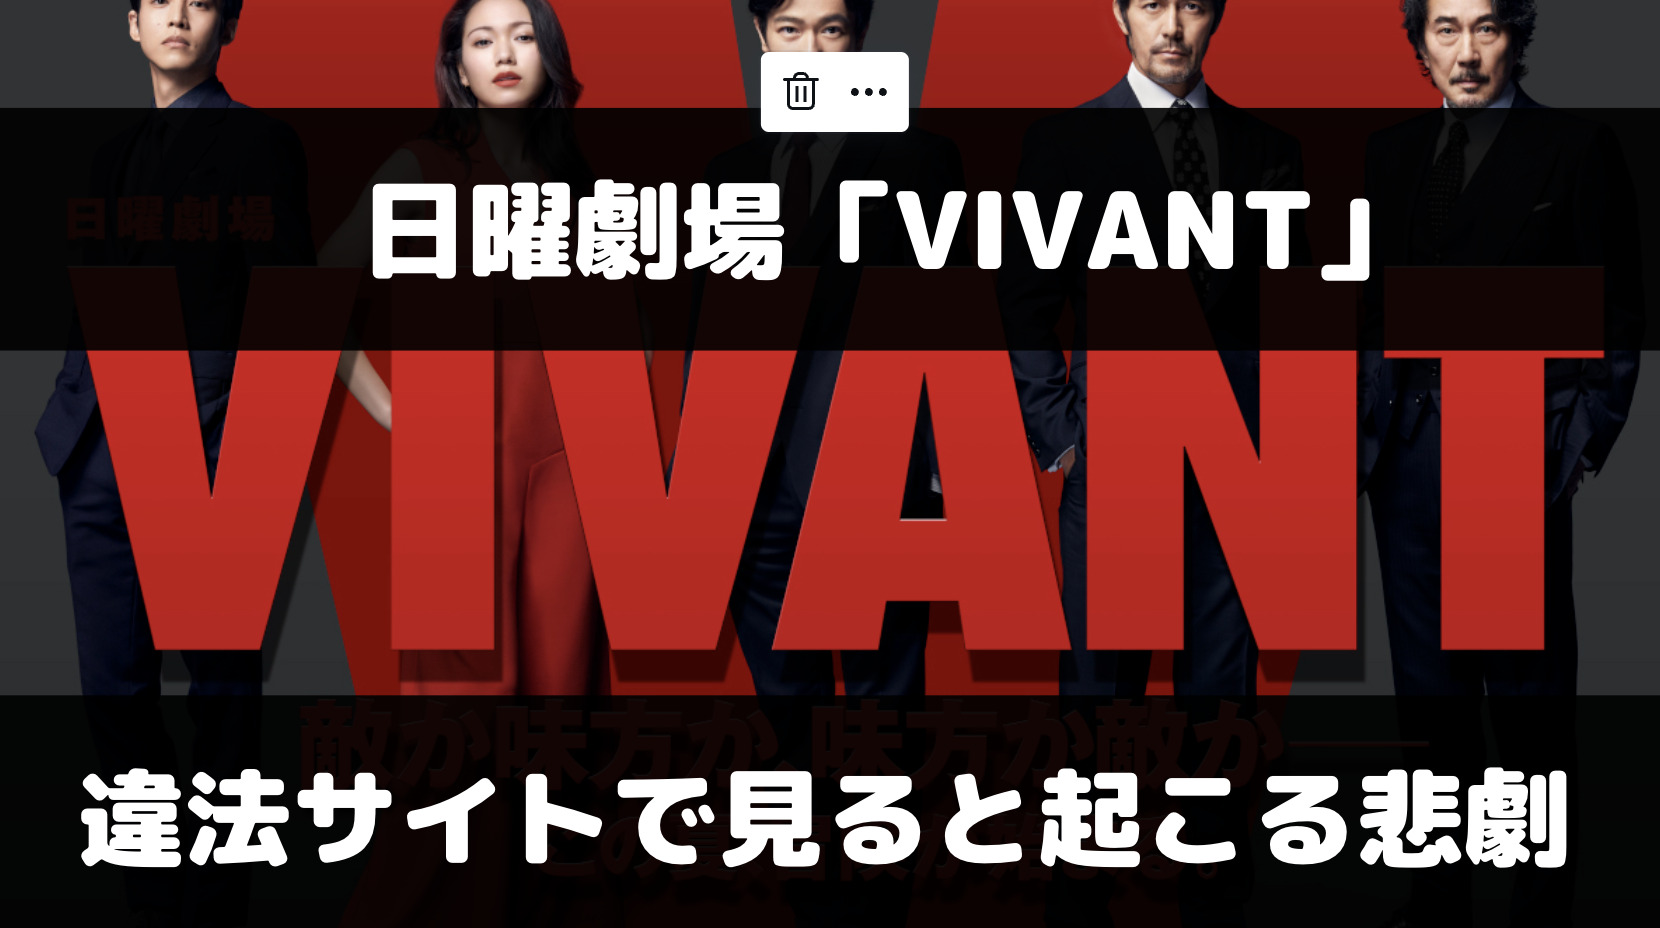 VIVANTの動画をpandora・dailymotion・miomioで無料視聴すると起きる悲劇